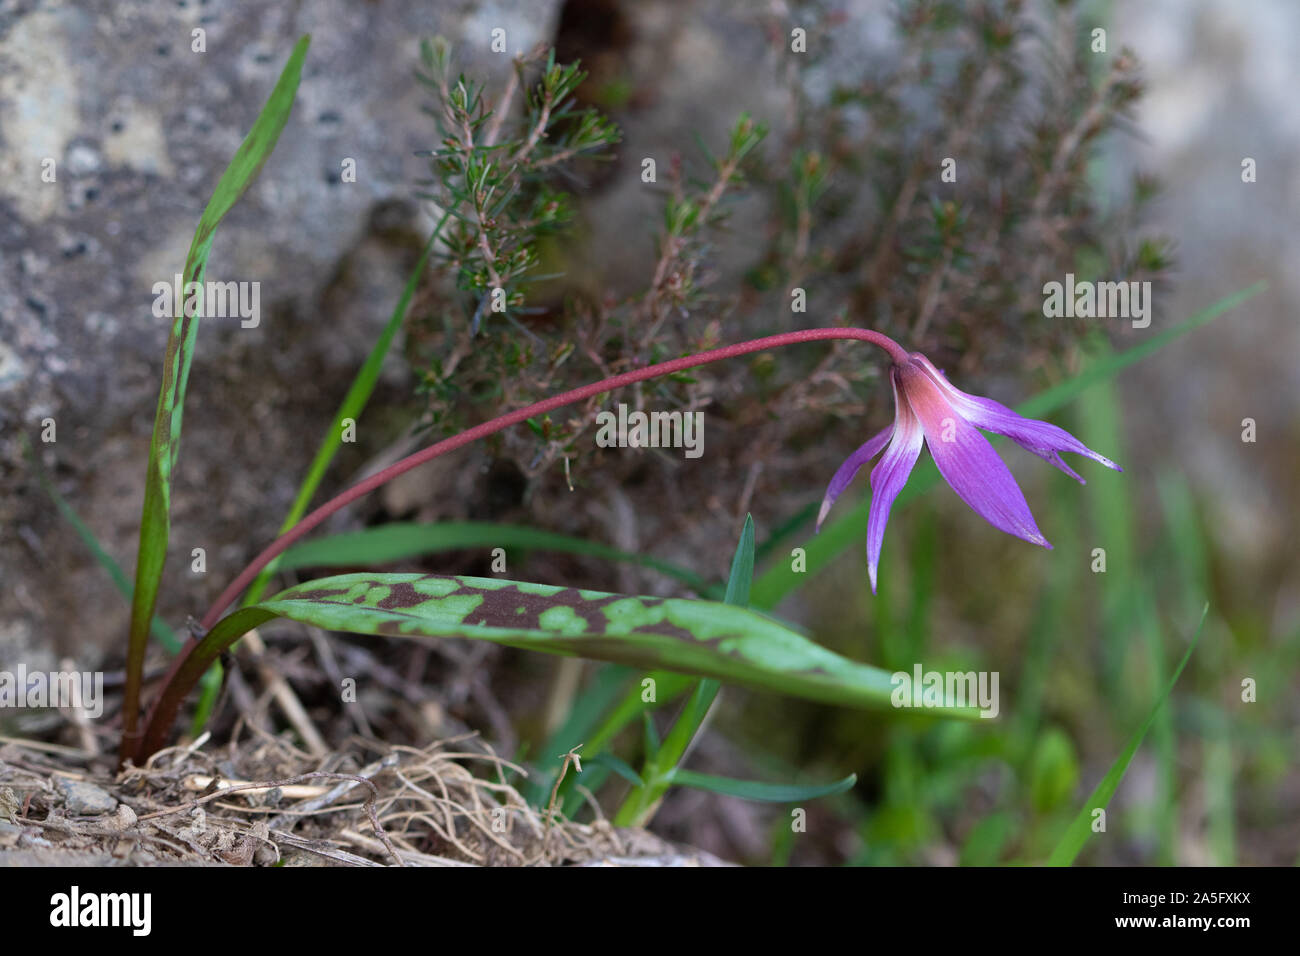 Hund - Zahn Violett (Erythronium dens-canis) Blüte Stockfoto